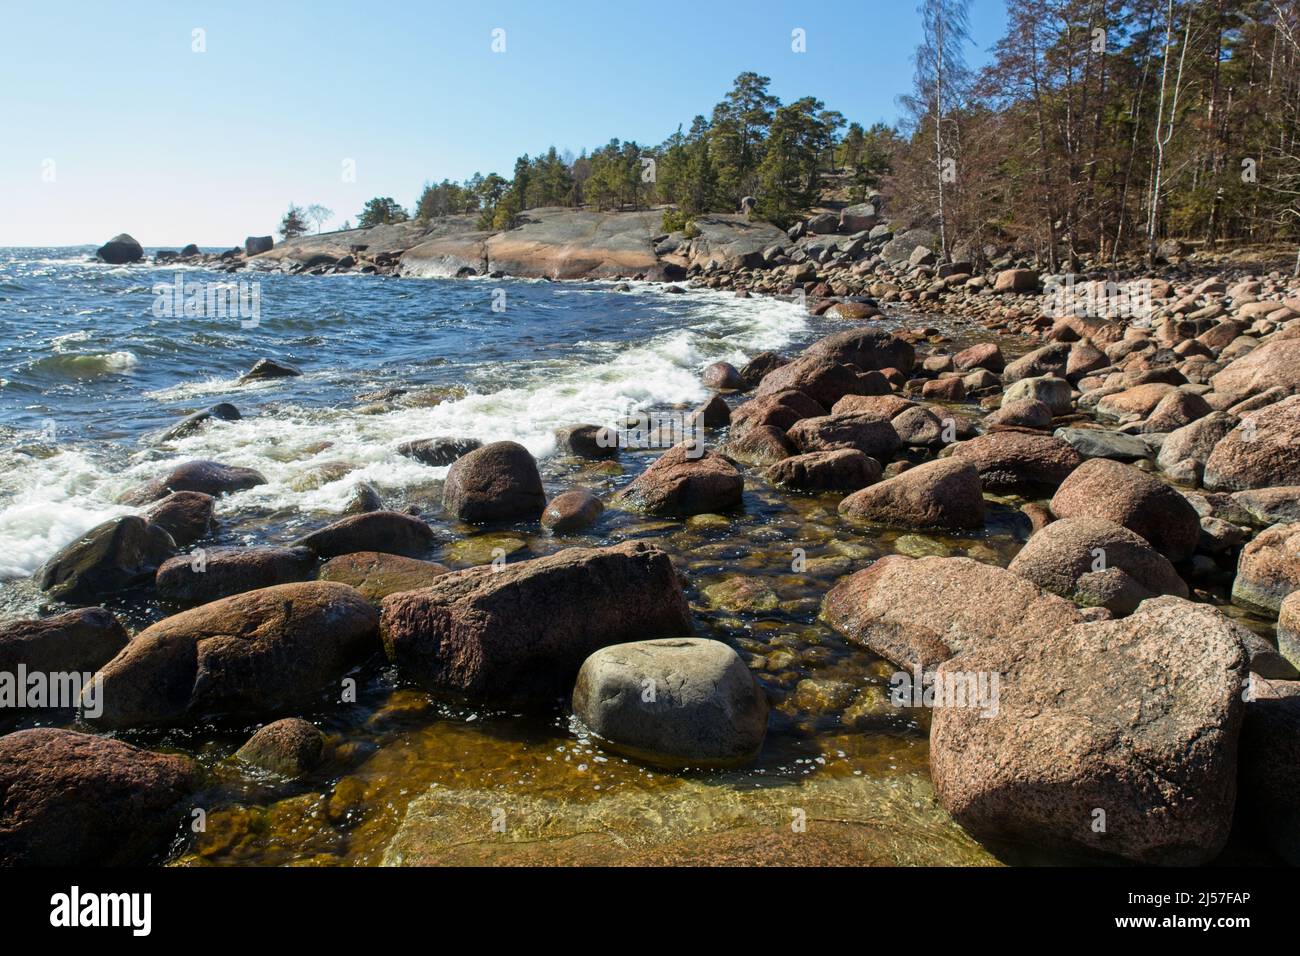 View of rocky seashore at Varlaxudden recreation area, Finland. Stock Photo